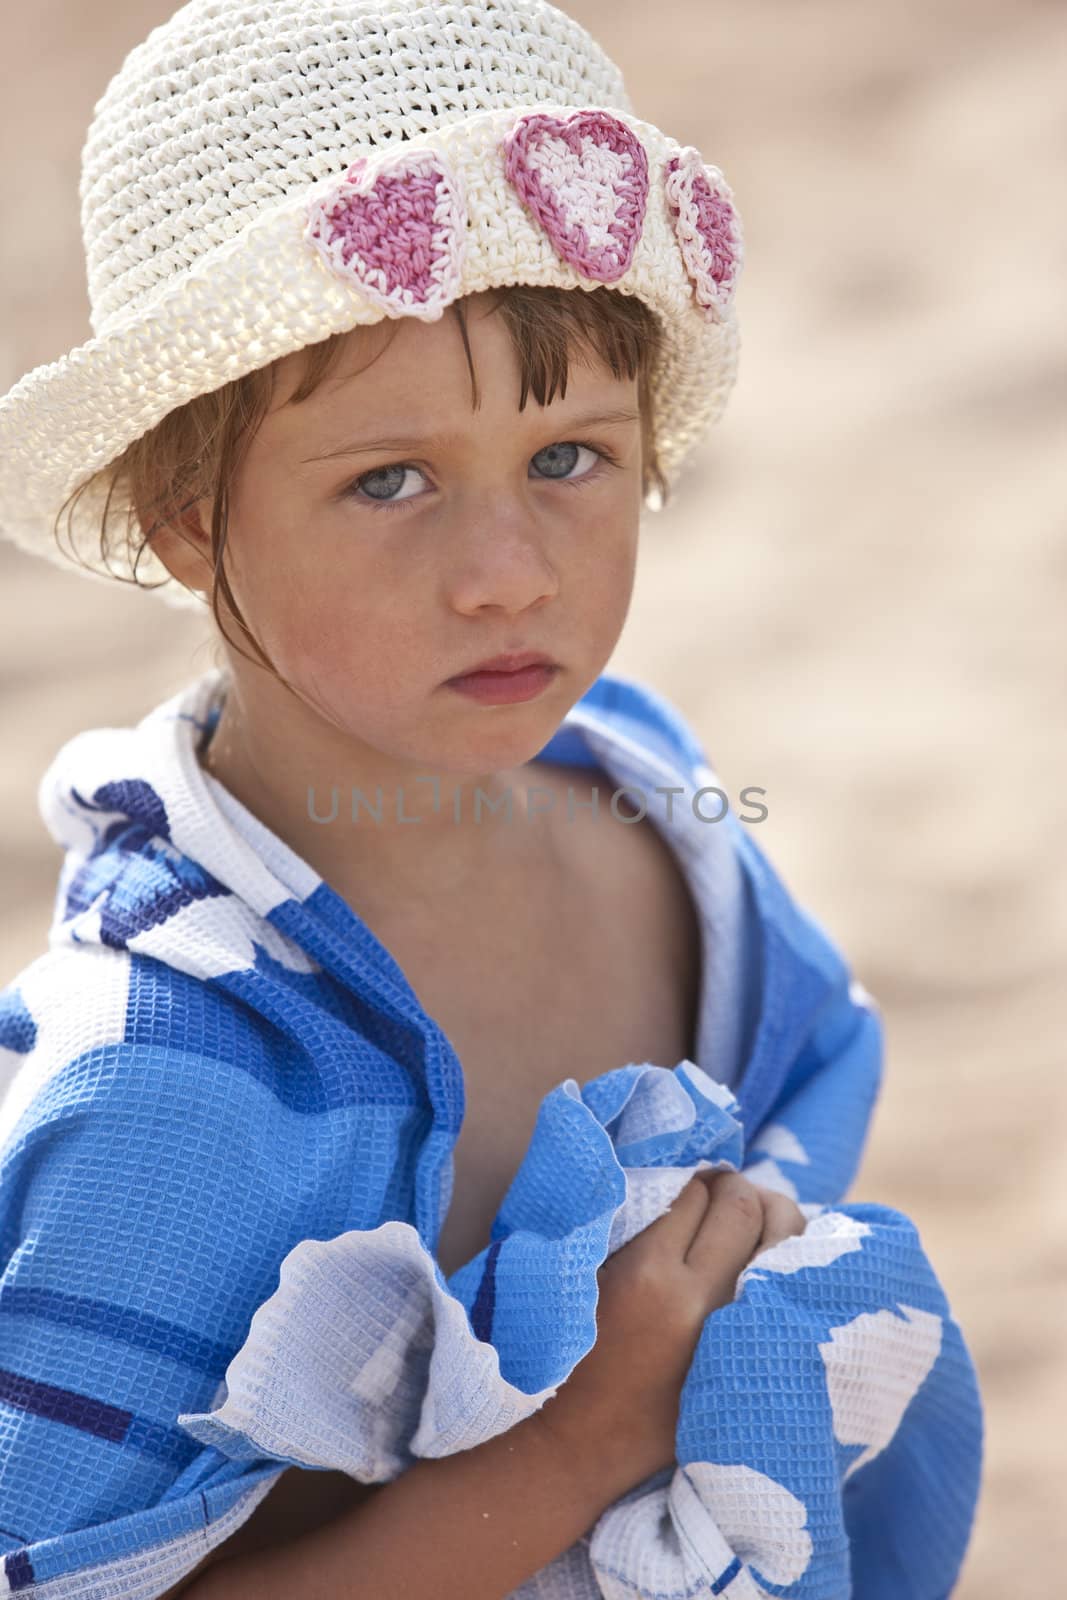 people series: sad summer little girl portrait